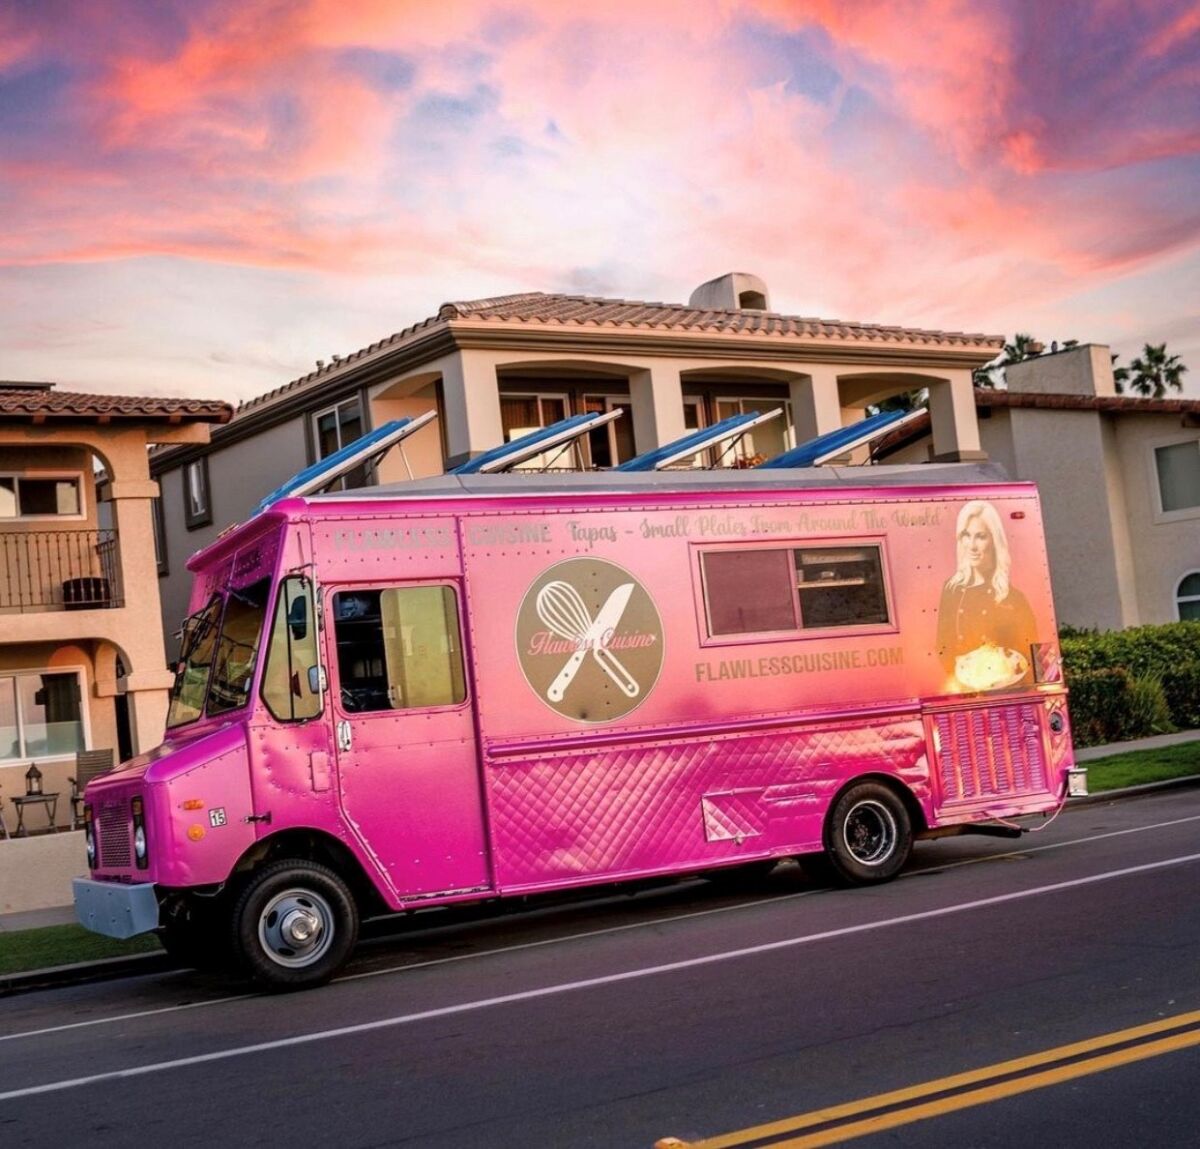 Celebrity chef Lauren Lawless will bring her Flawless Cuisine food truck to Taste of December Nights 